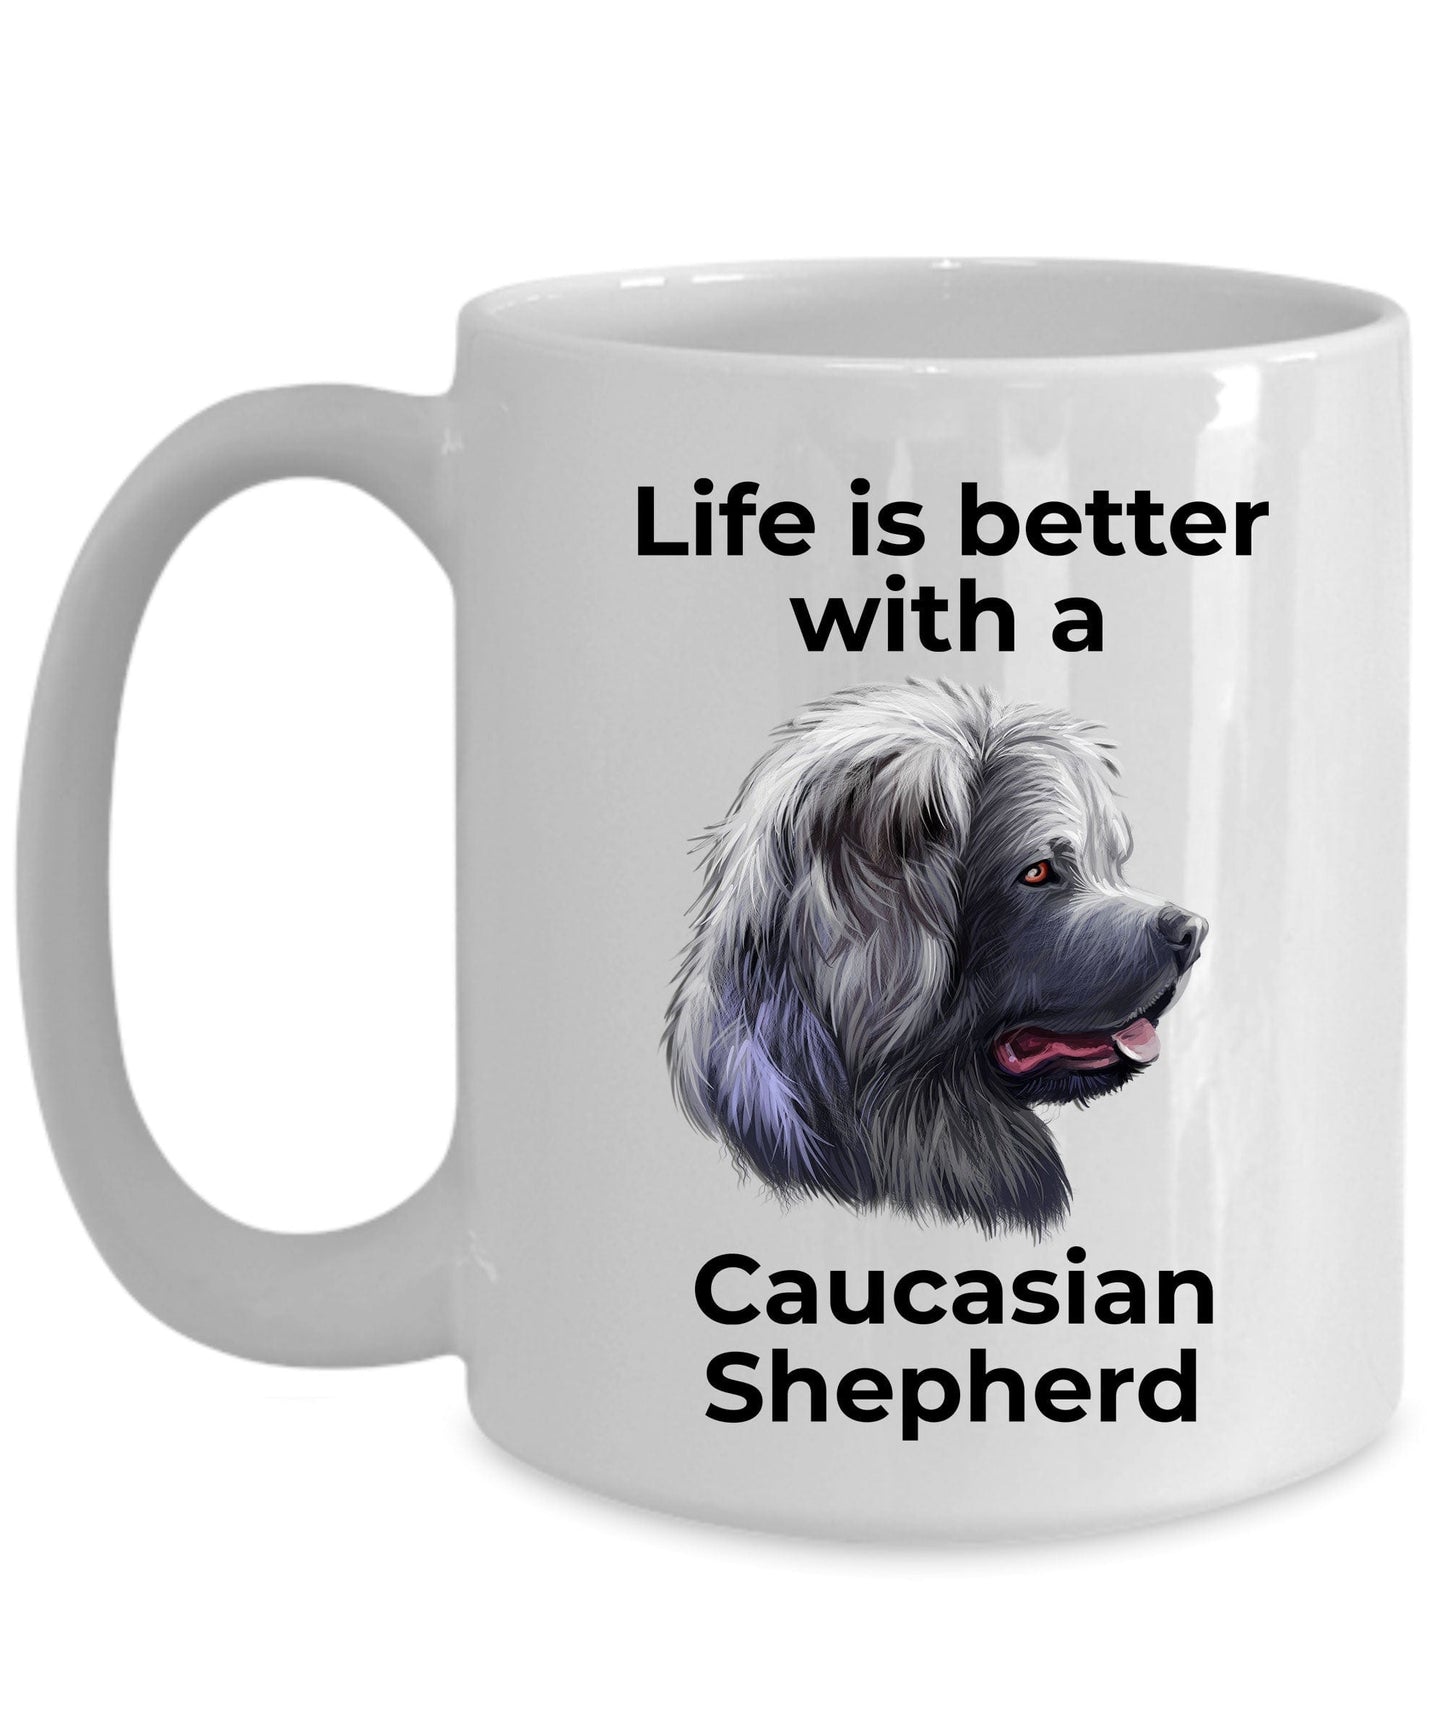 Caucasian Shepherd Dog Ceramic Coffee Cup - Life is Better with a Caucasian Shepherd